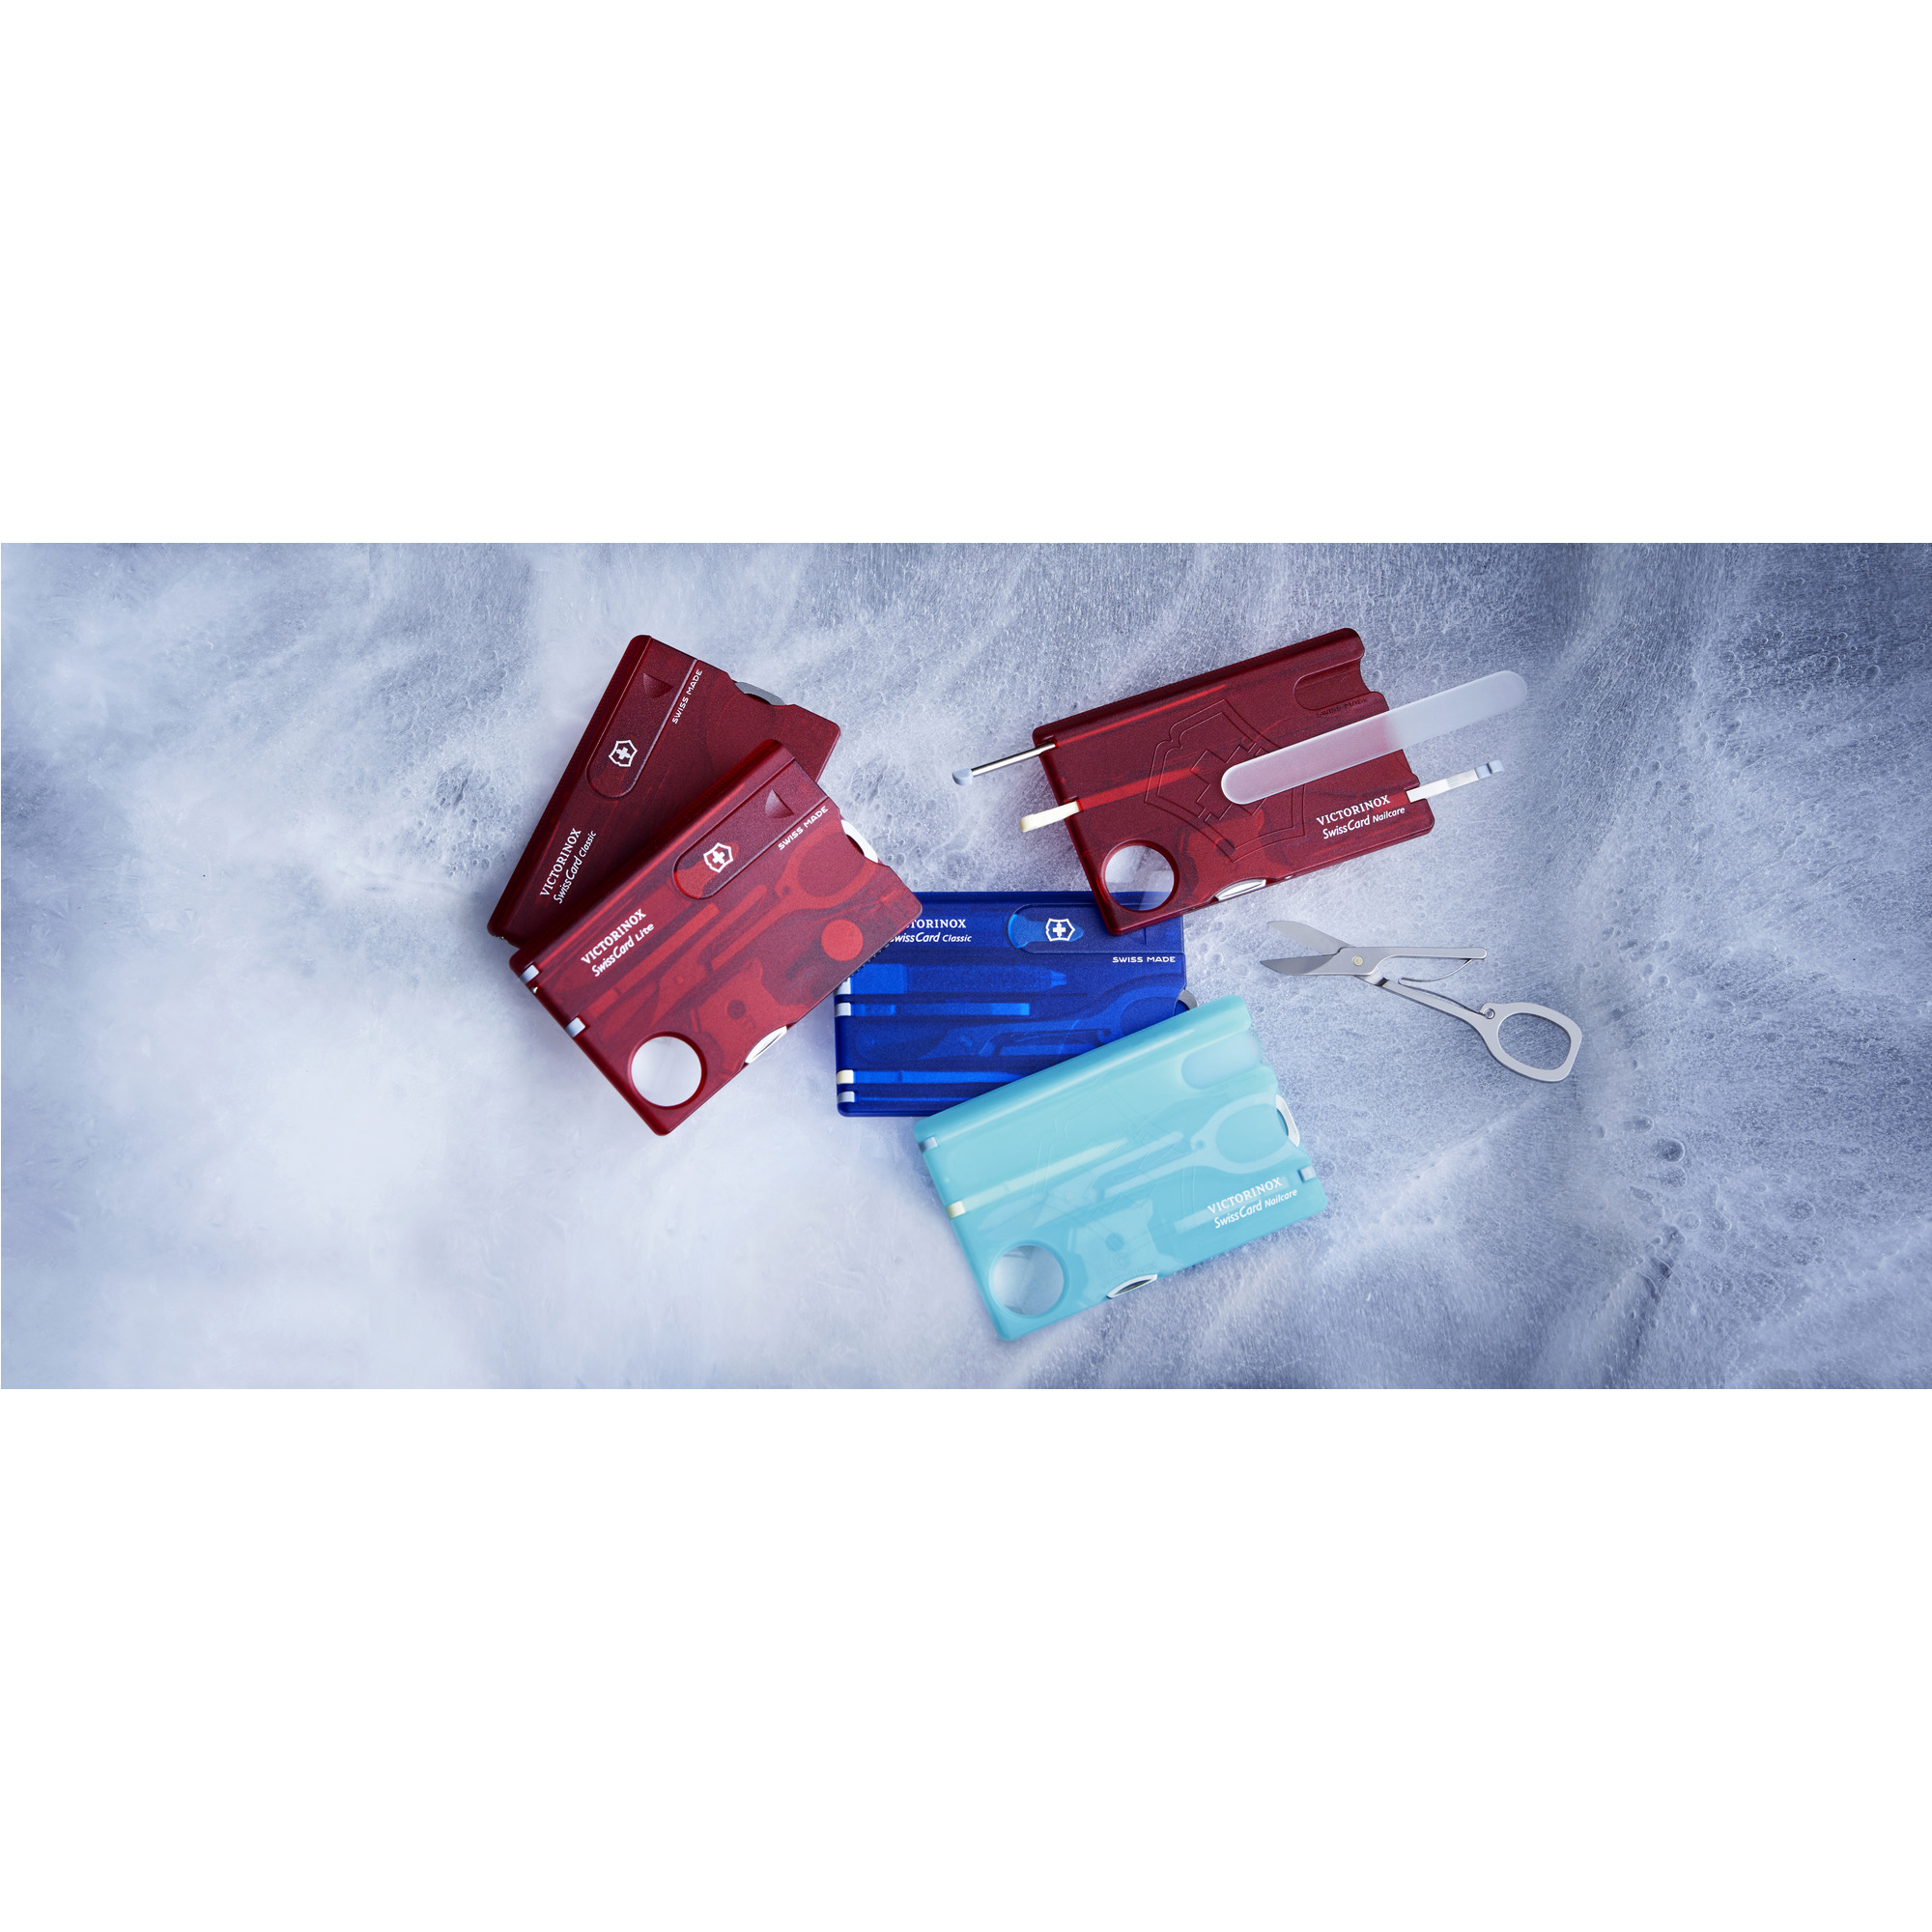 Victorinox Swiss Card Nailcare rot transparent